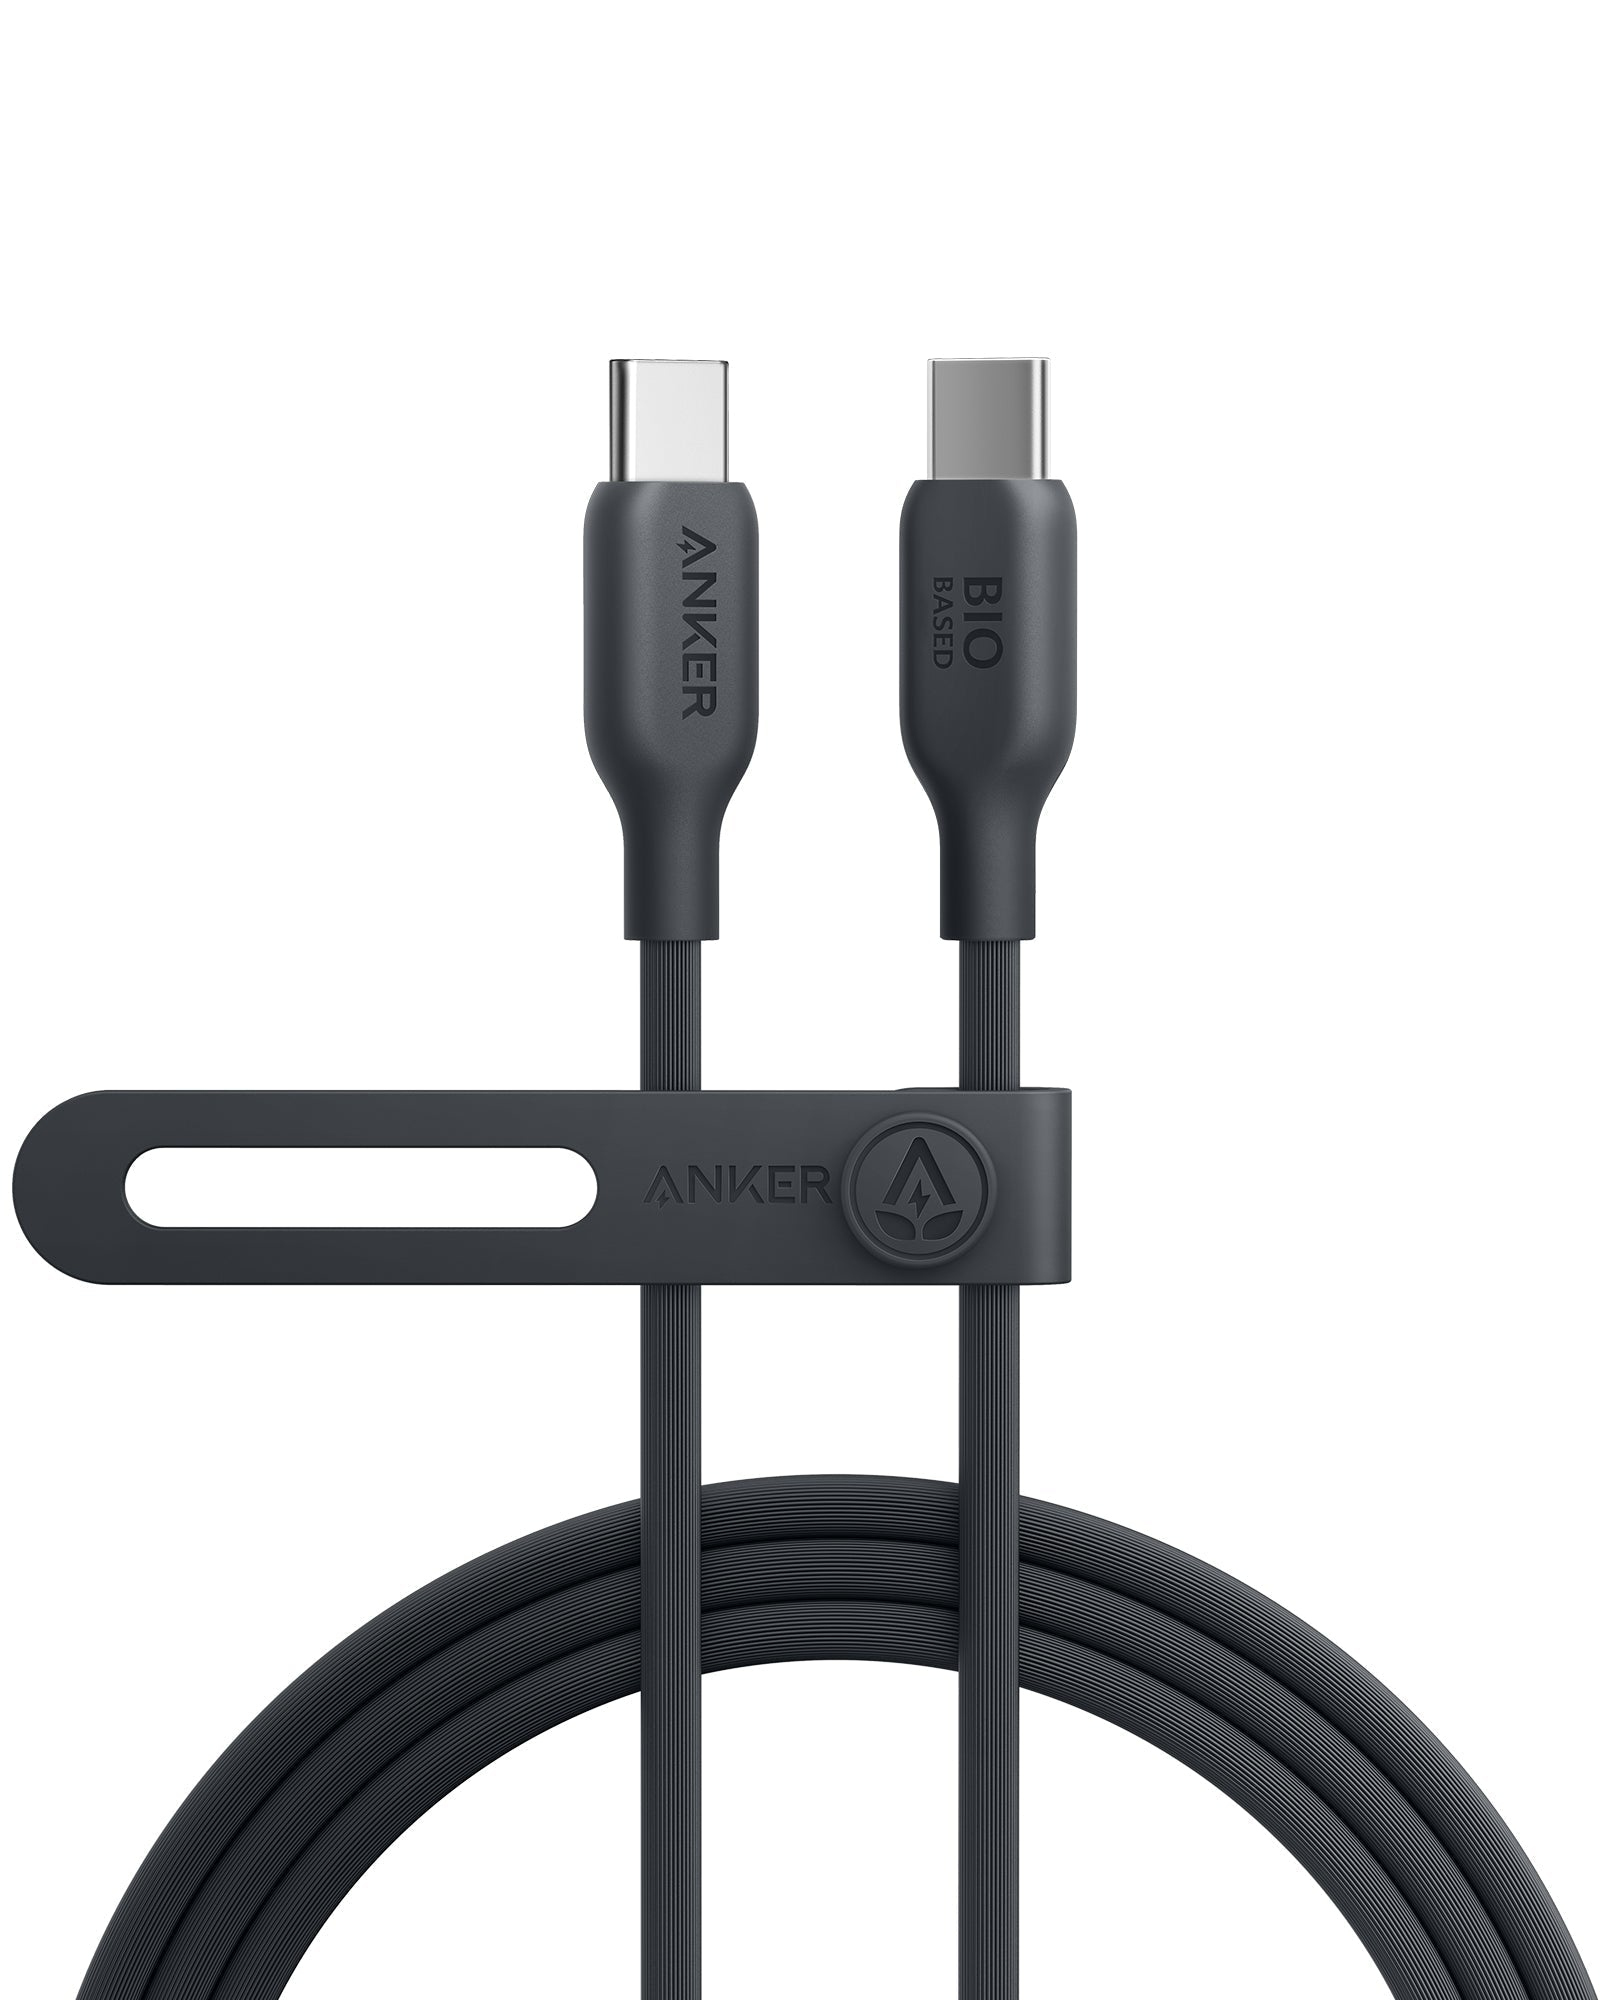 Photos - Cable (video, audio, USB) ANKER 543 USB cable 1.8 m USB C Black A80E2G11 